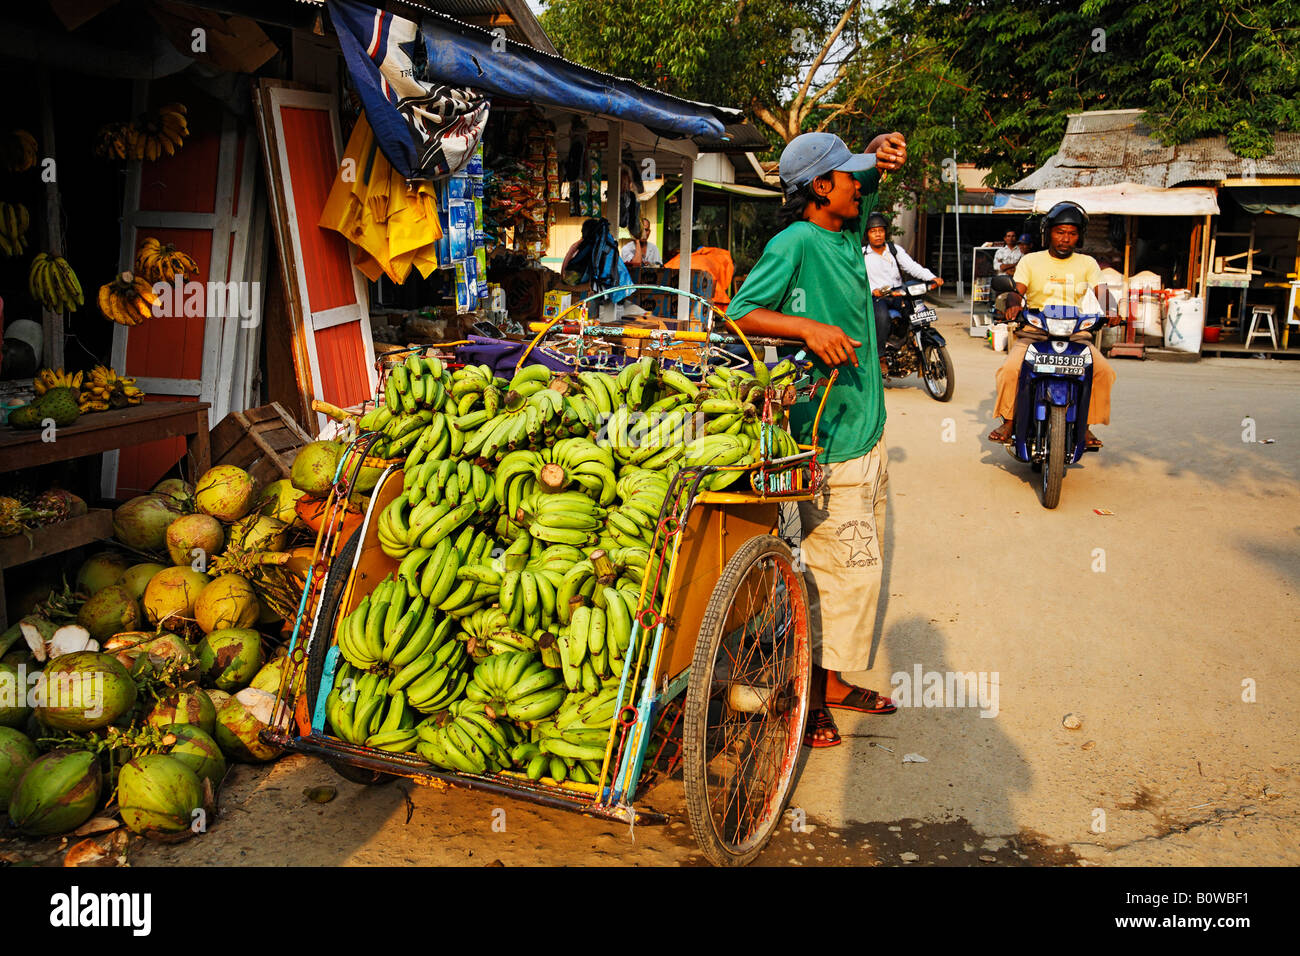 Produce vendor selling bananas in Tenggarong, East Kalimantan, Borneo, Indonesia Stock Photo